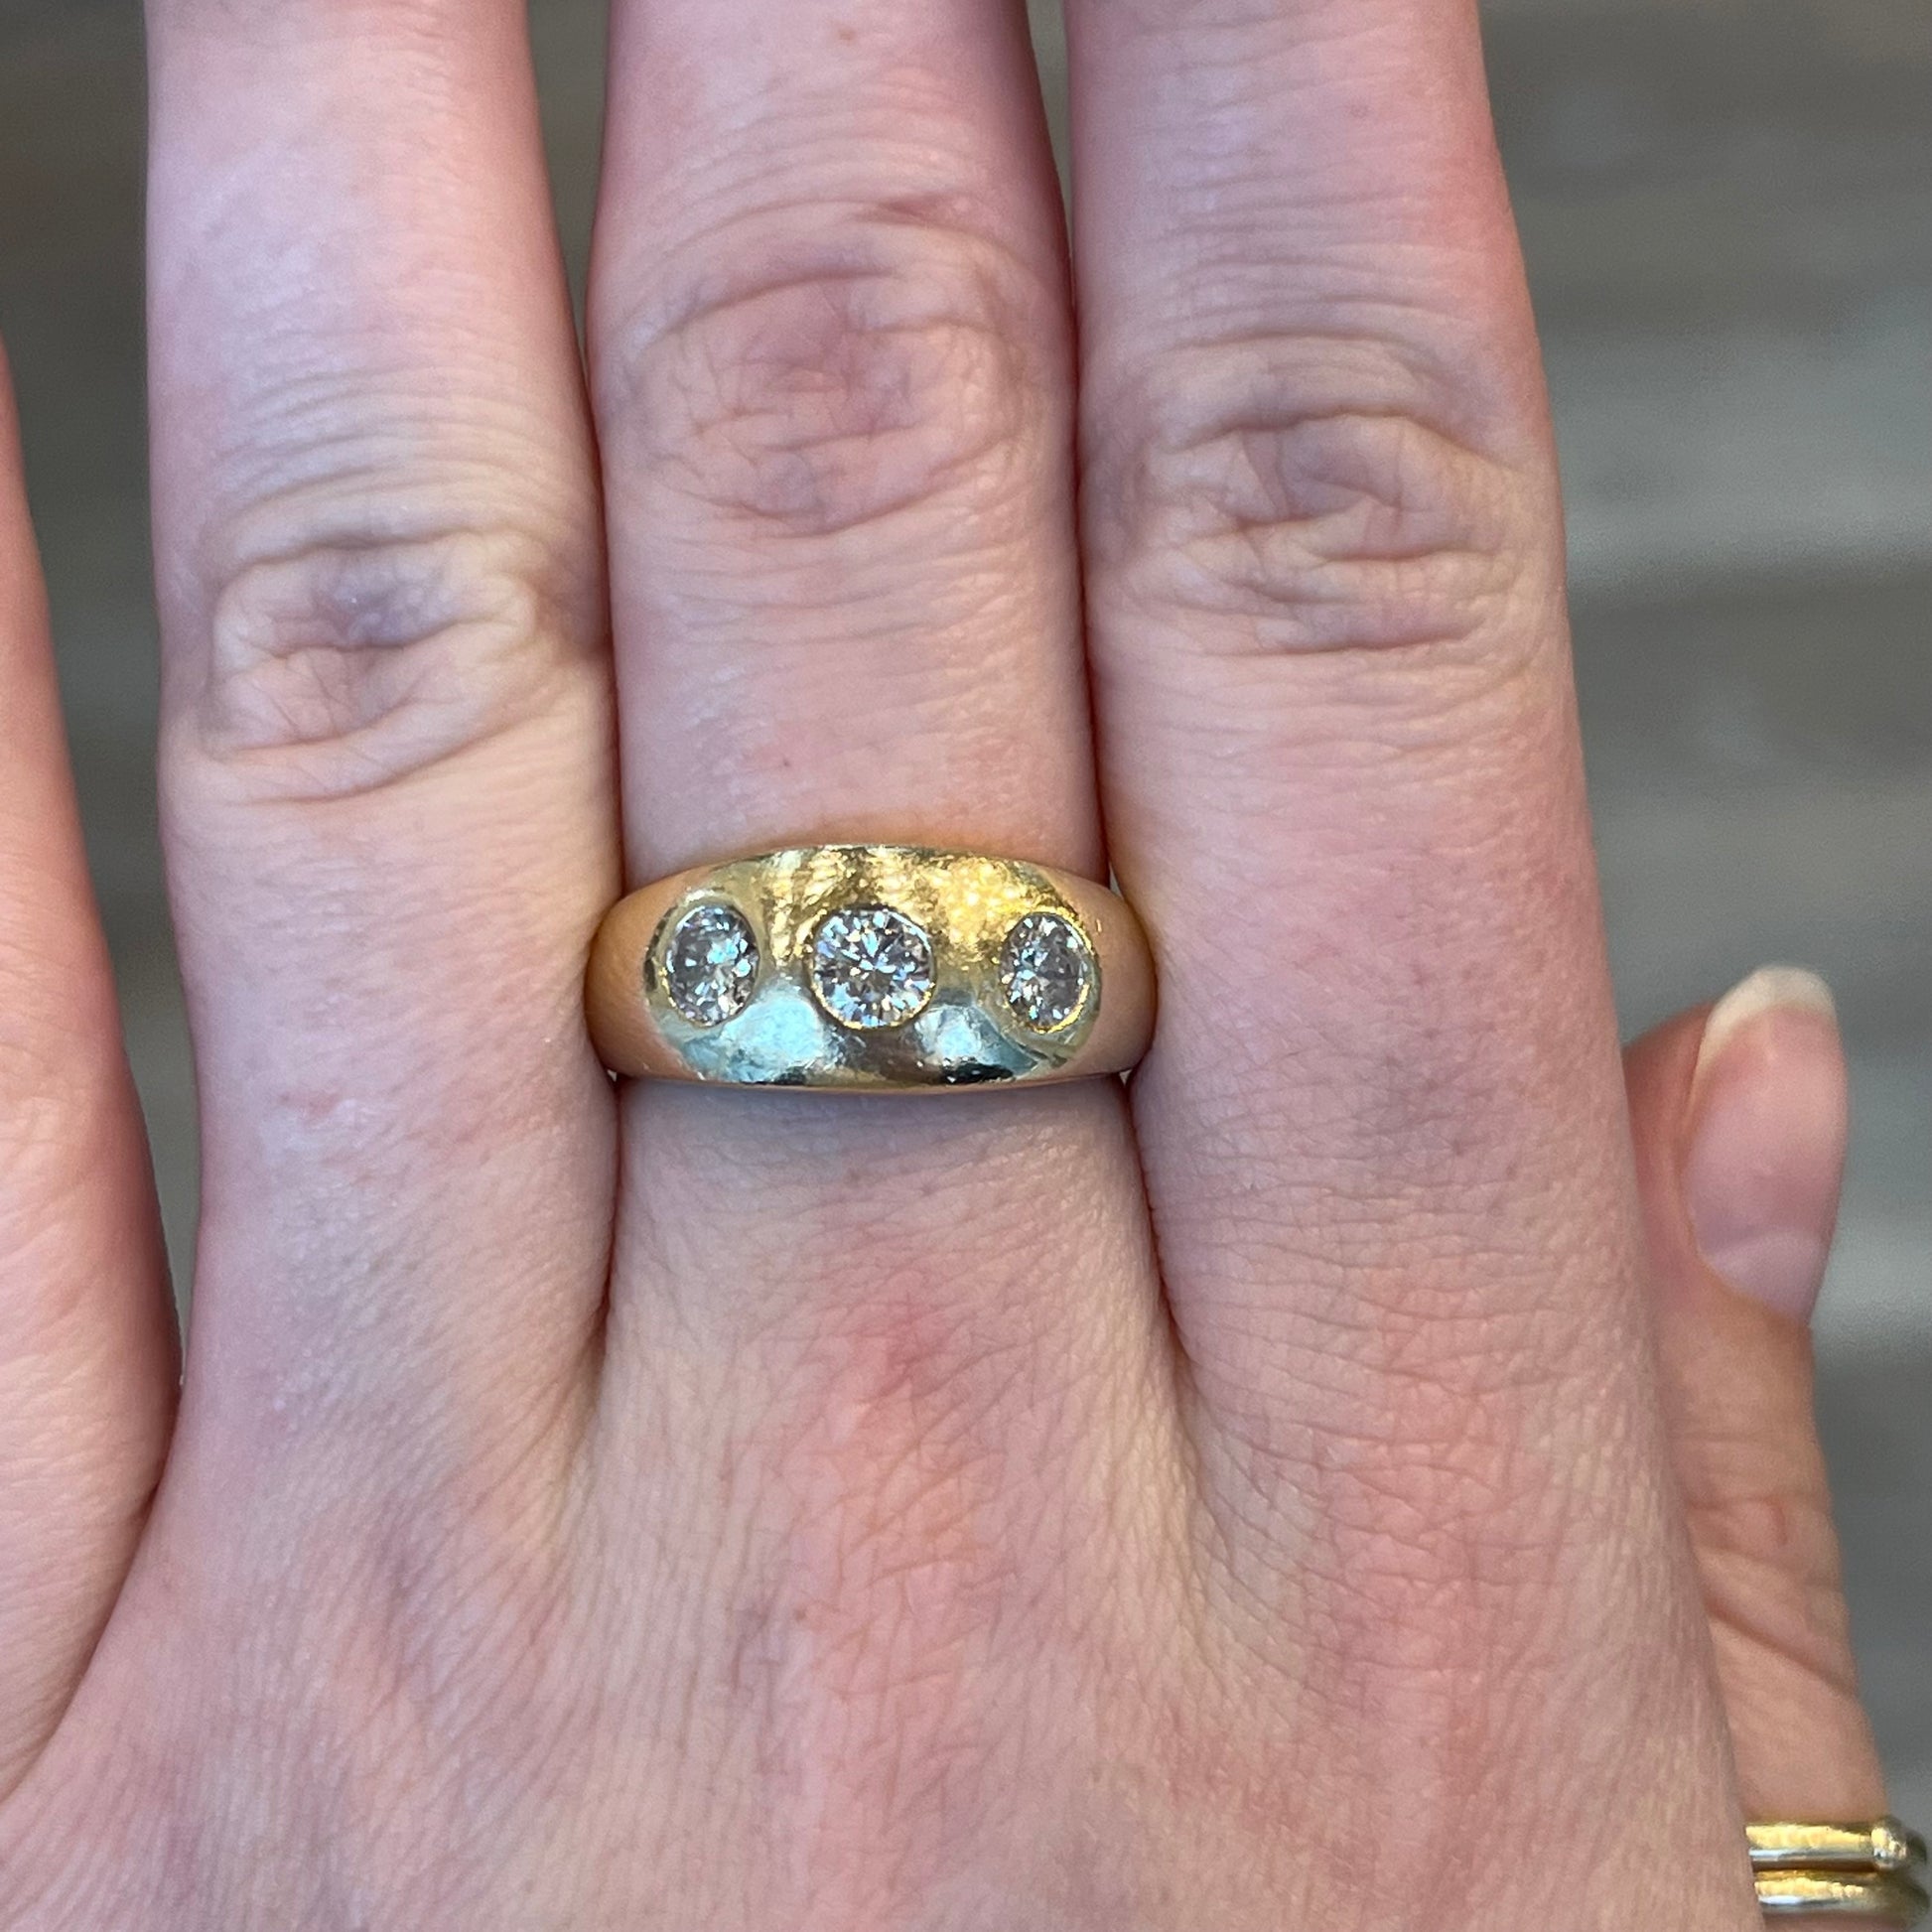 1950's Three Stone Diamond Cocktail Ring 14k Yellow Gold